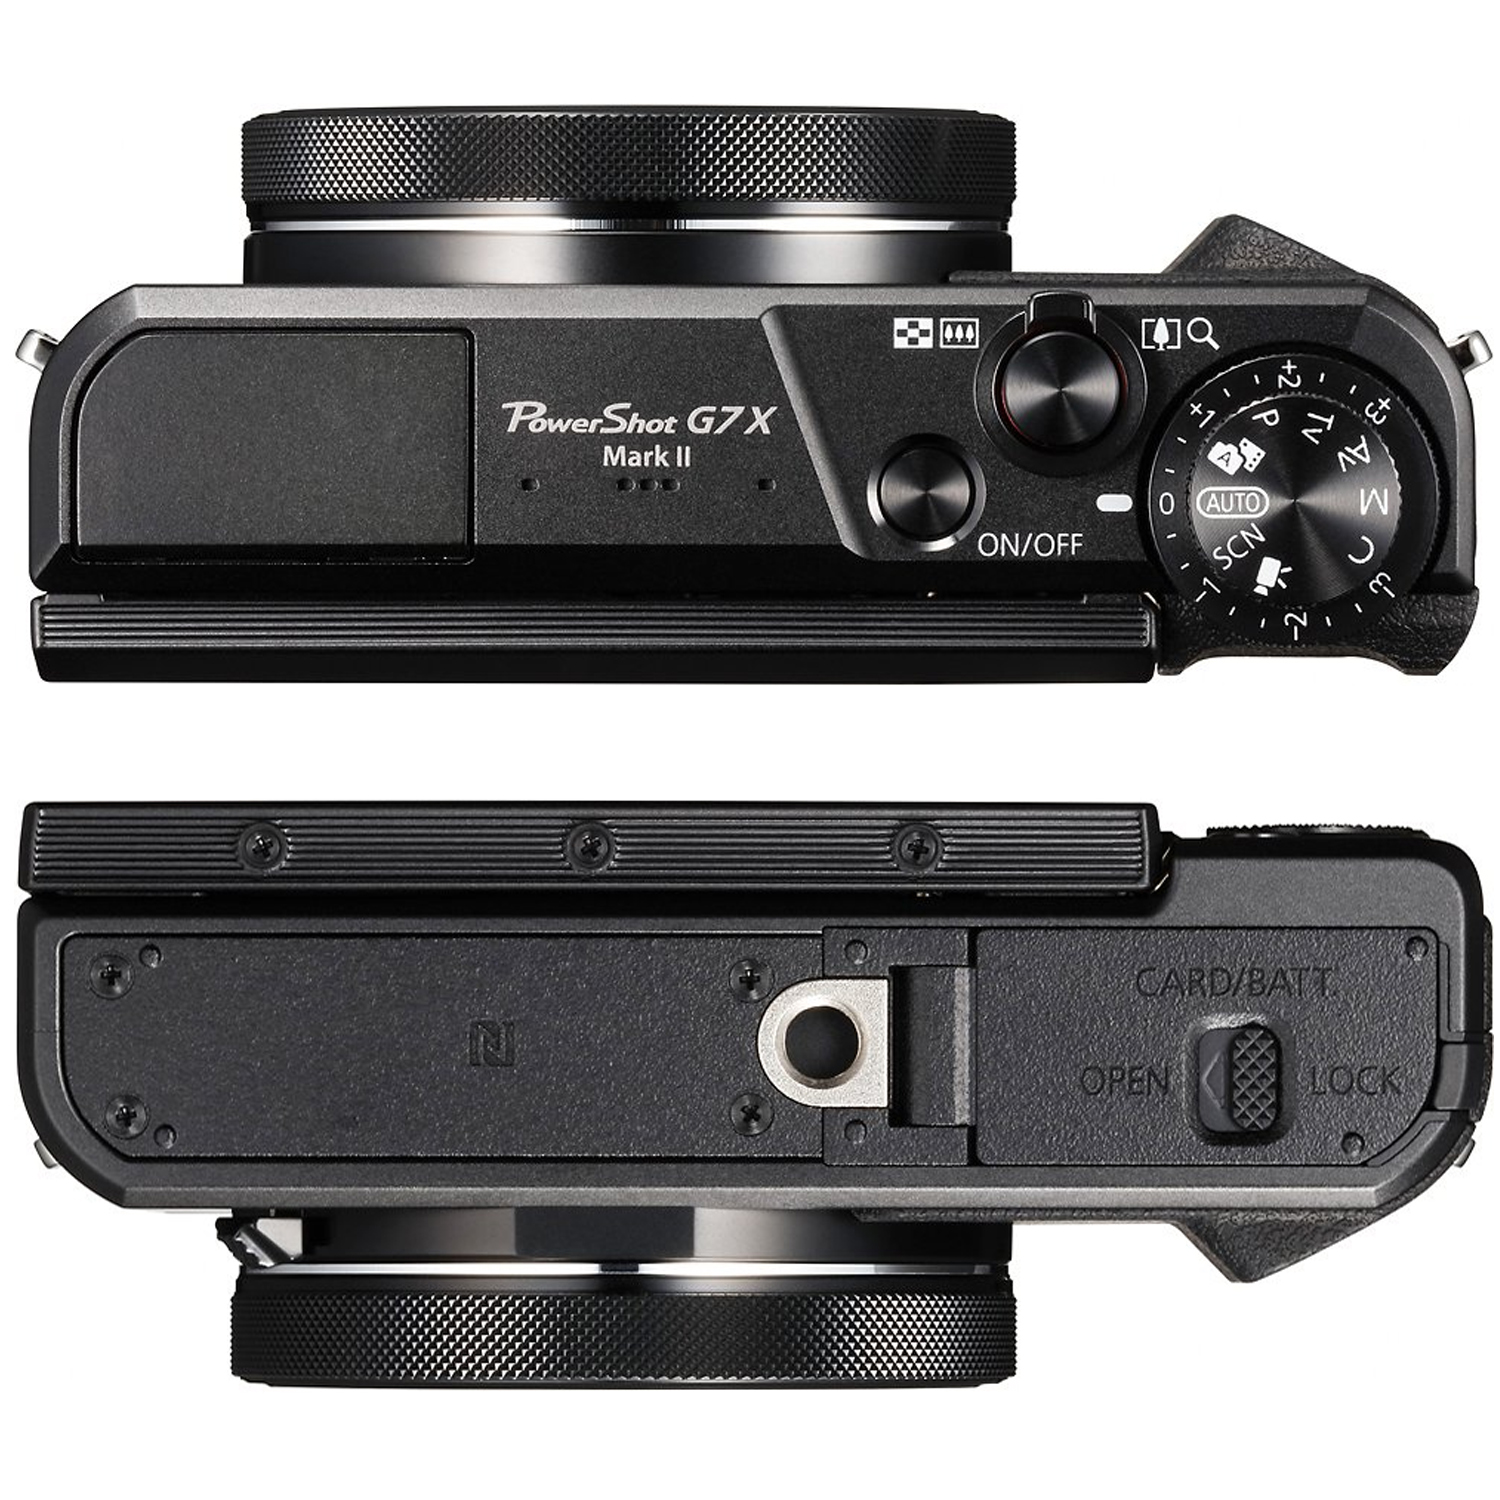 Canon PowerShot G7 X Mark II 20.1MP Digital Camera- Black - image 3 of 7